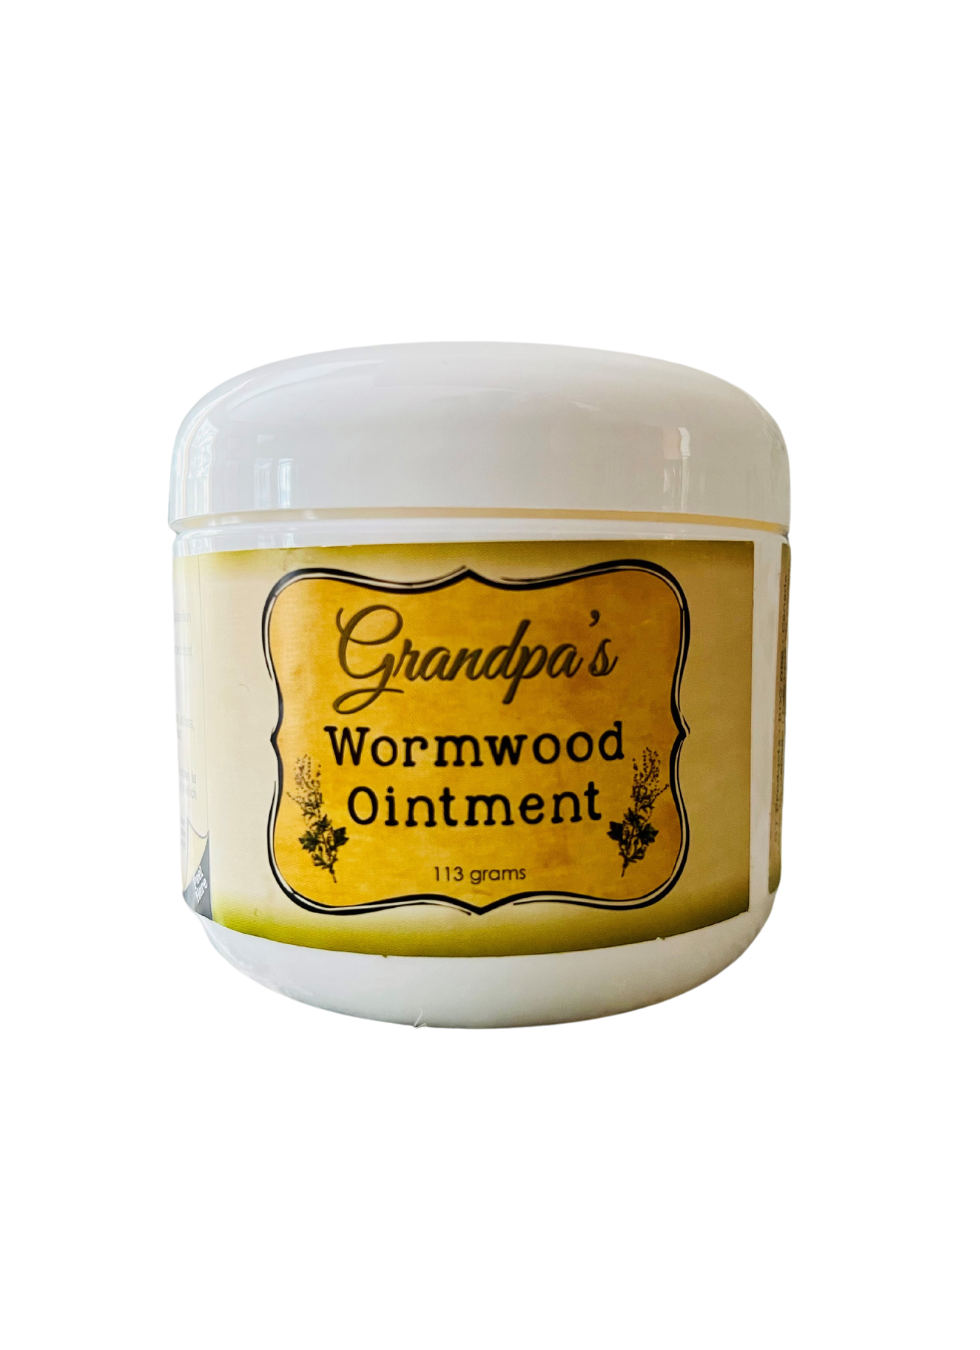 Grandpas Wormwood Ointment 113 grams